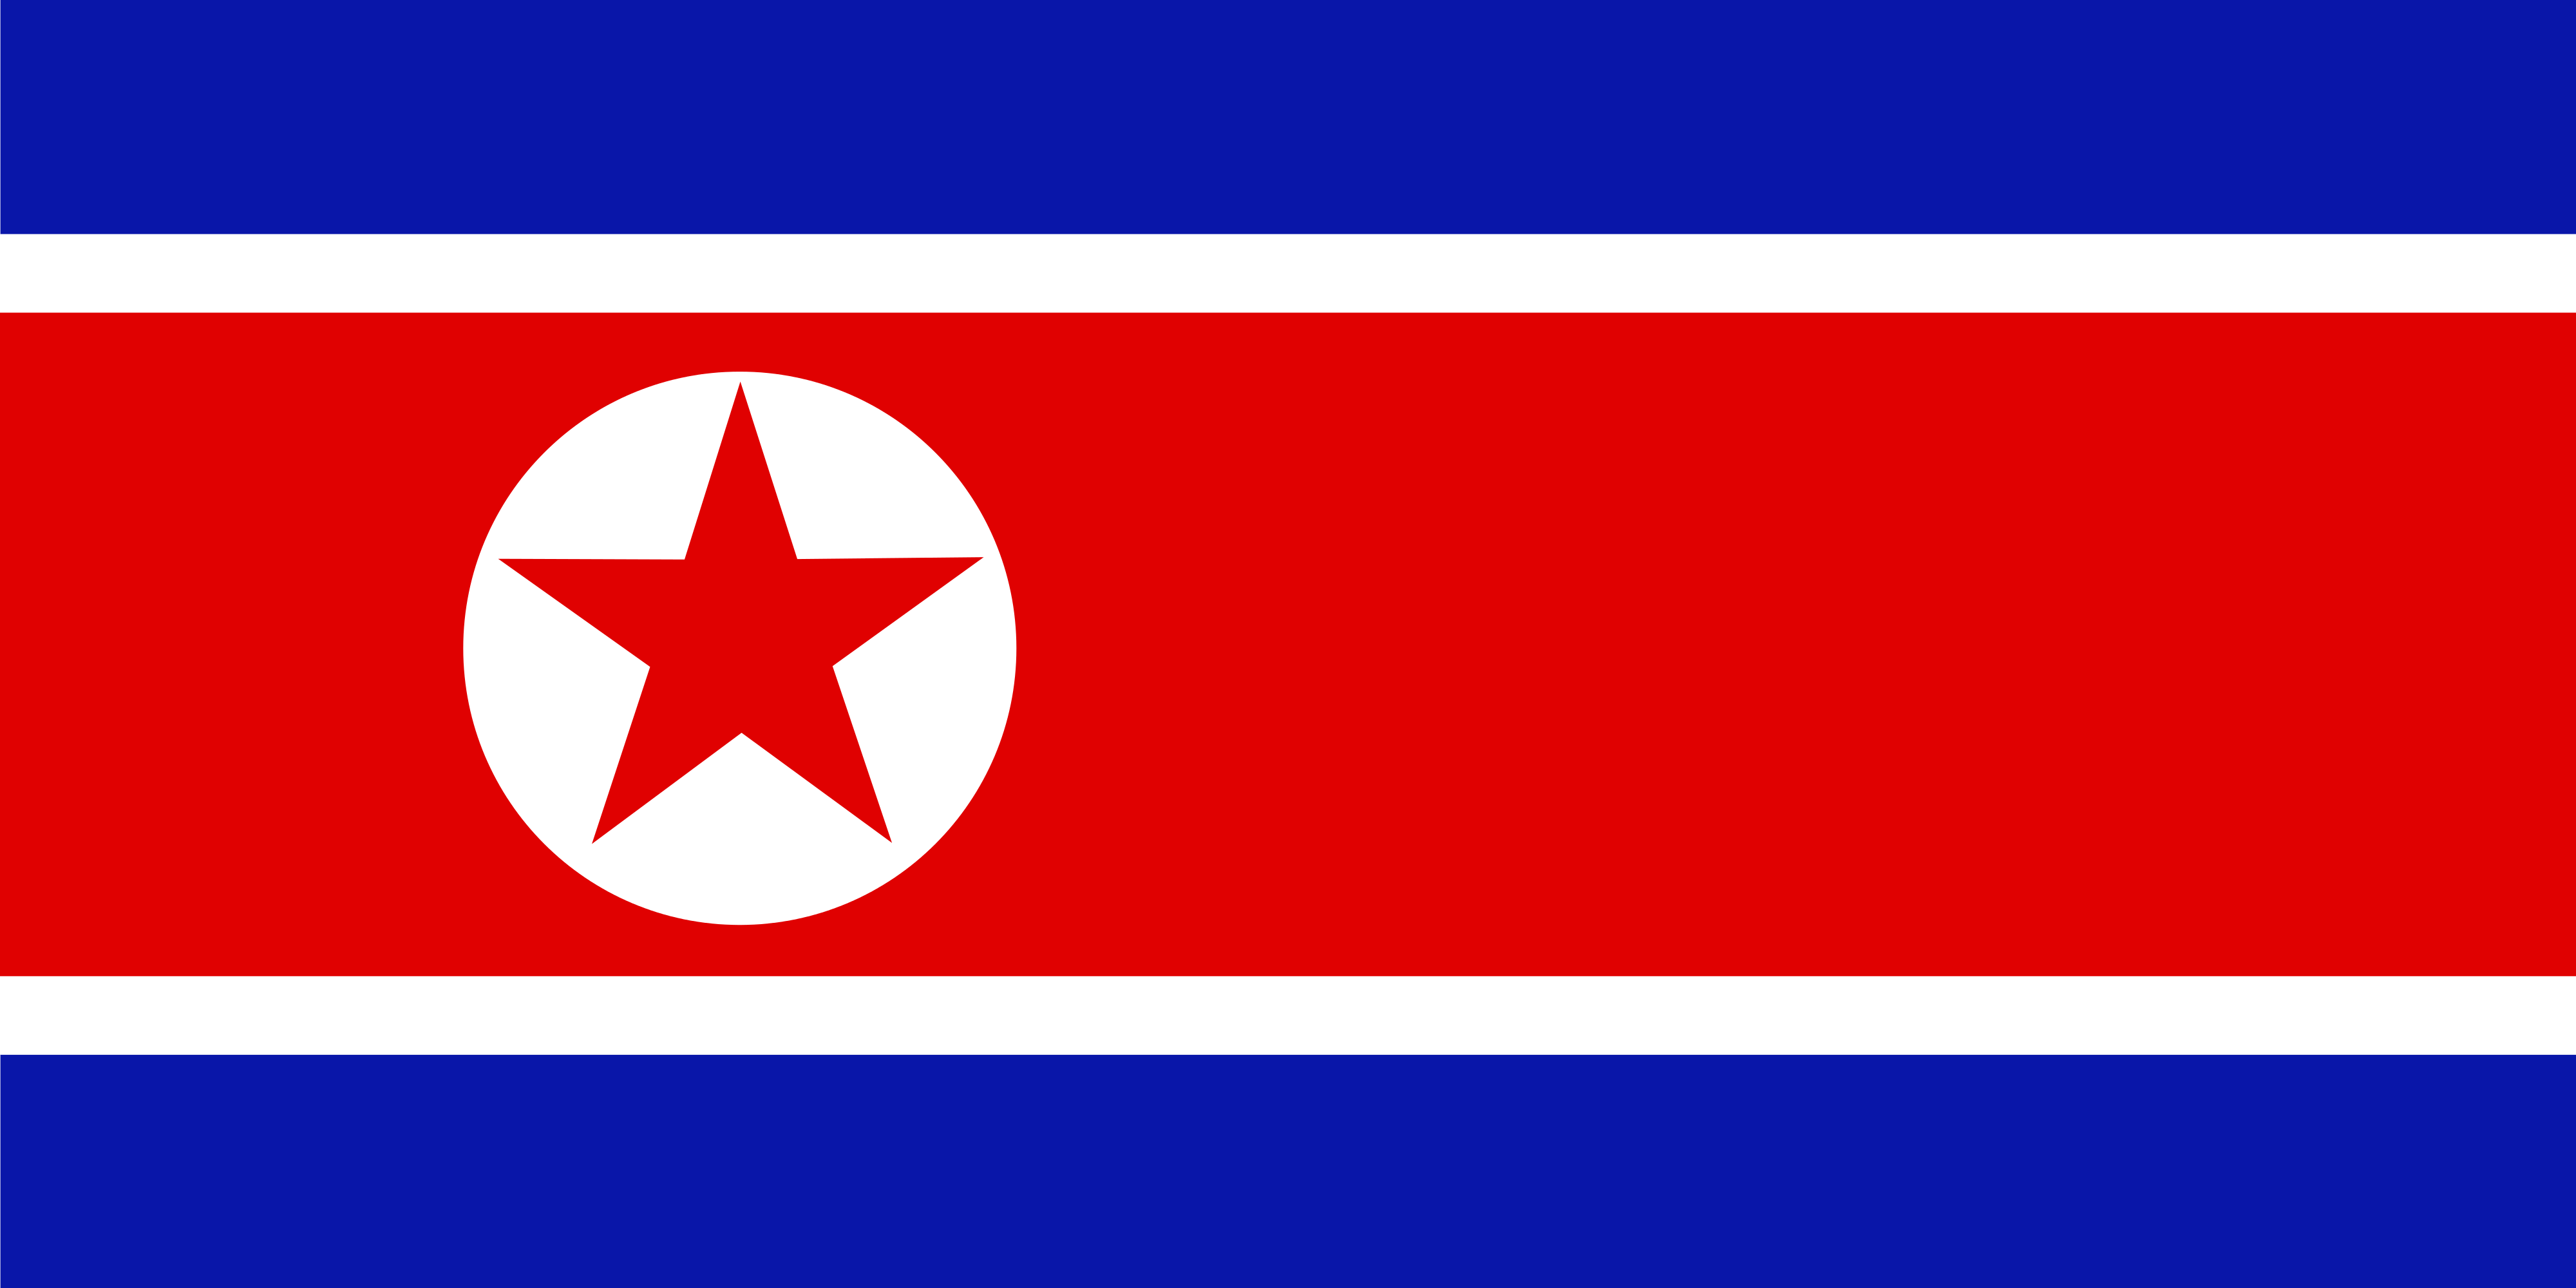 Flag Of North Korea Or Democratic People S Republic Dprk Clipart